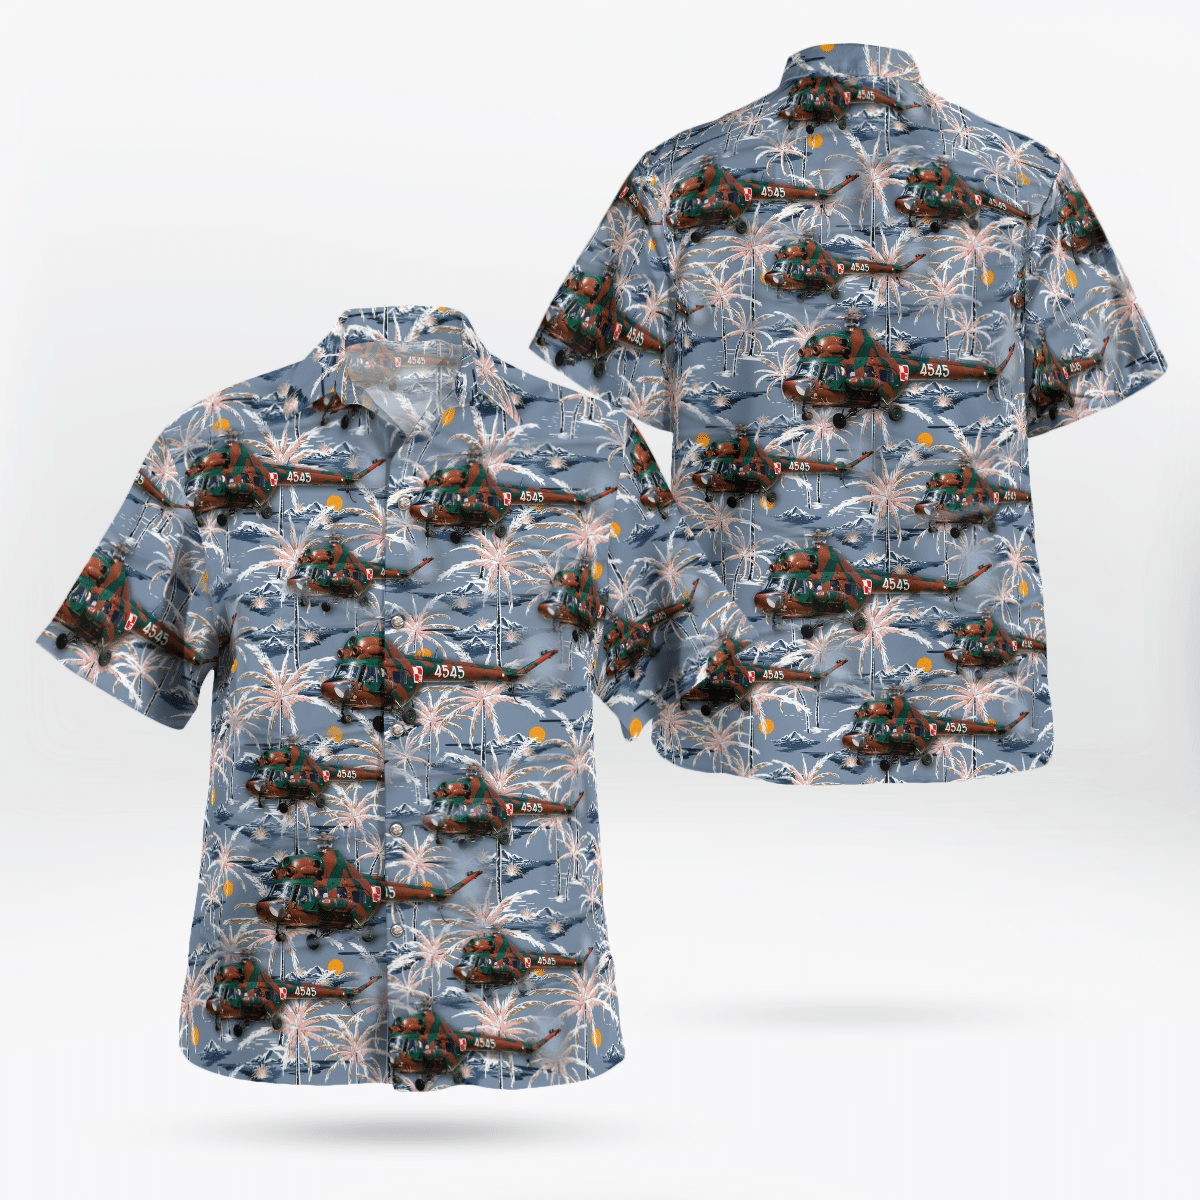 Get a new Hawaiian shirt to enjoy summer vacation 199